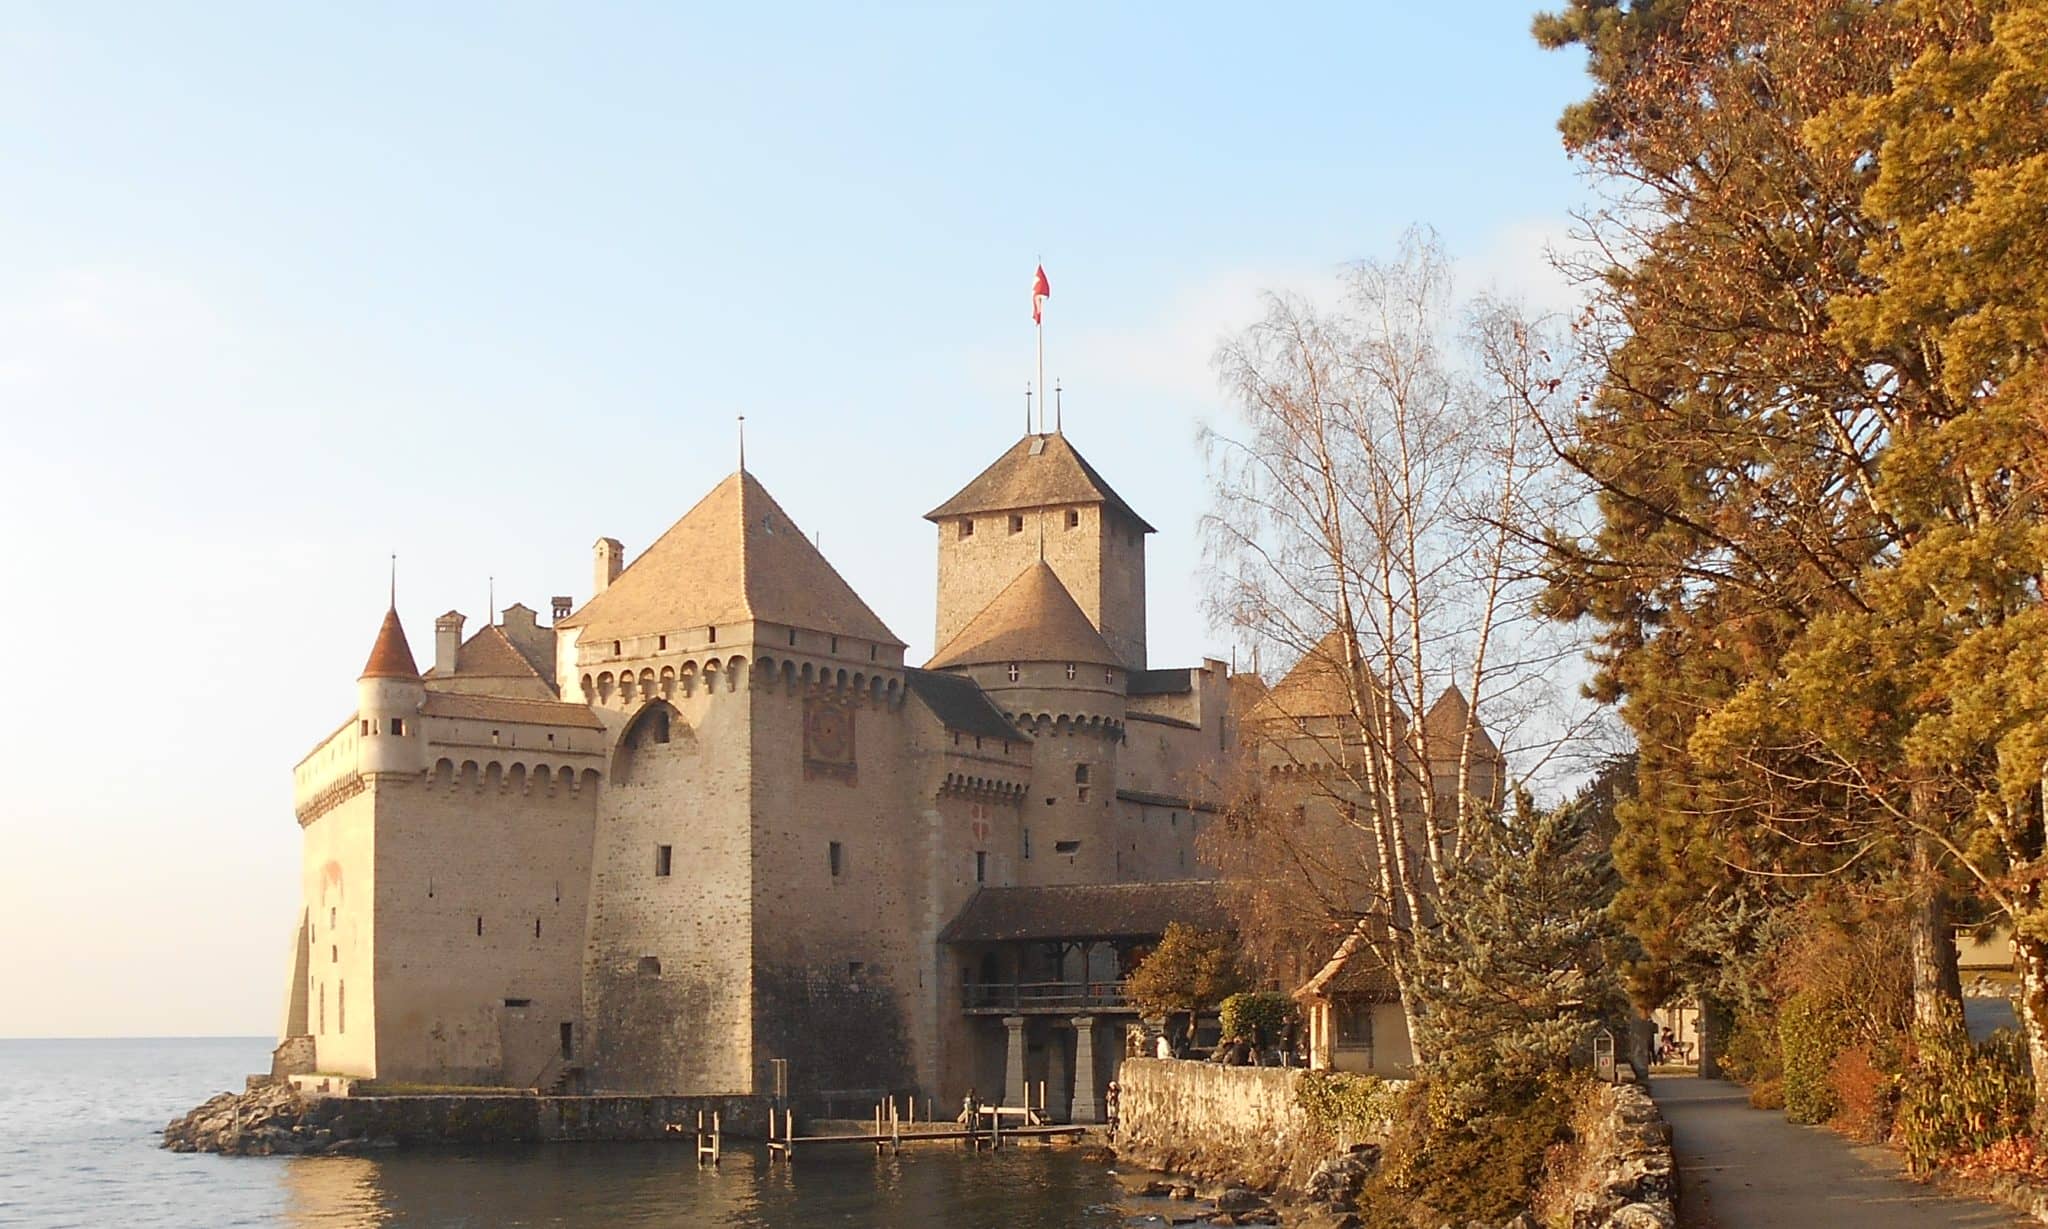  Château de Chillon: Ένα μεσαιωνικό κάστρο στις ακτές της λίμνης της Γενεύης